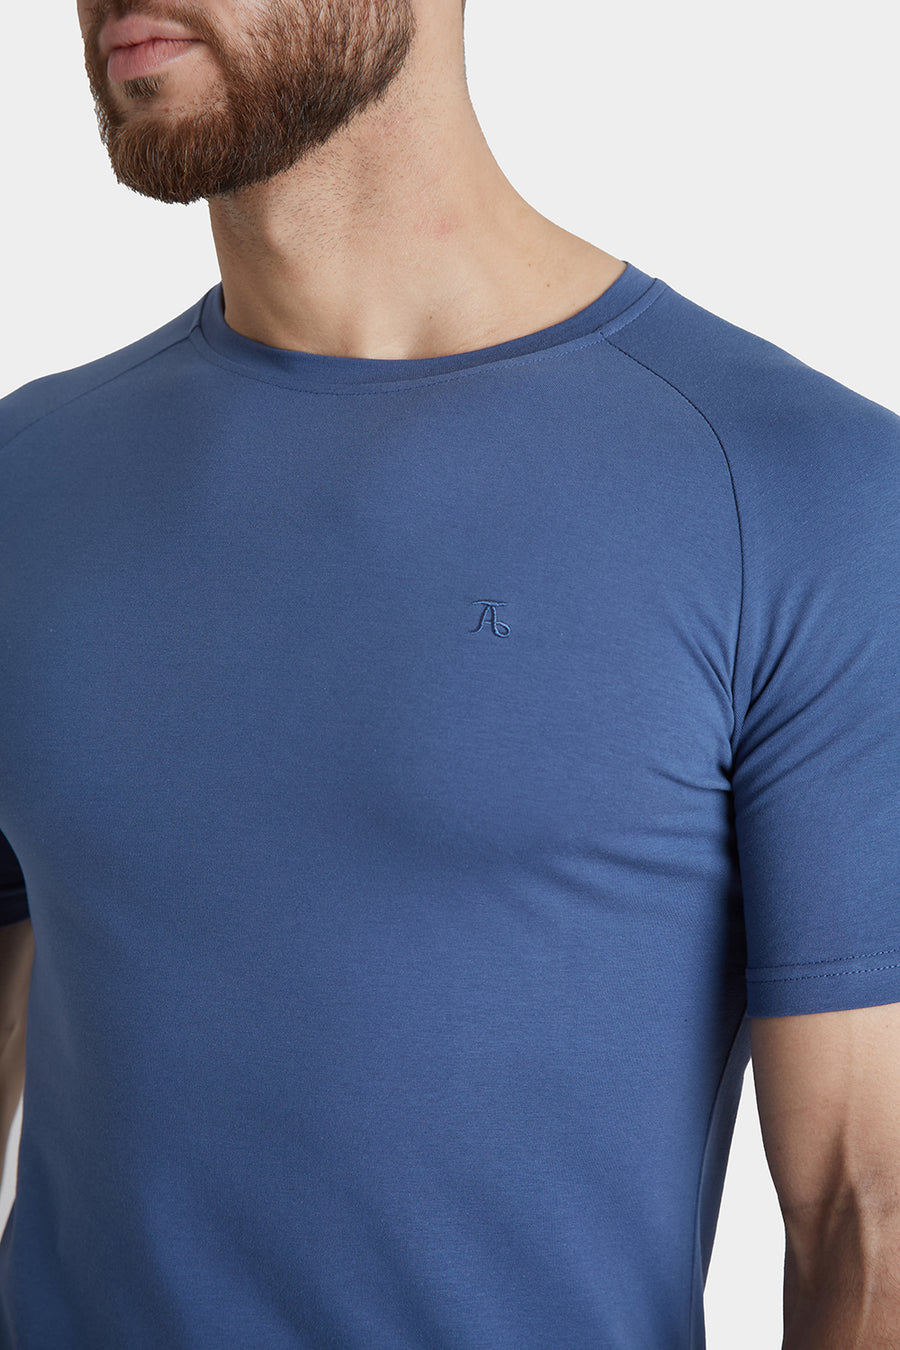 Premium Athletic Fit T-Shirt in Denim Blue - TAILORED ATHLETE - USA